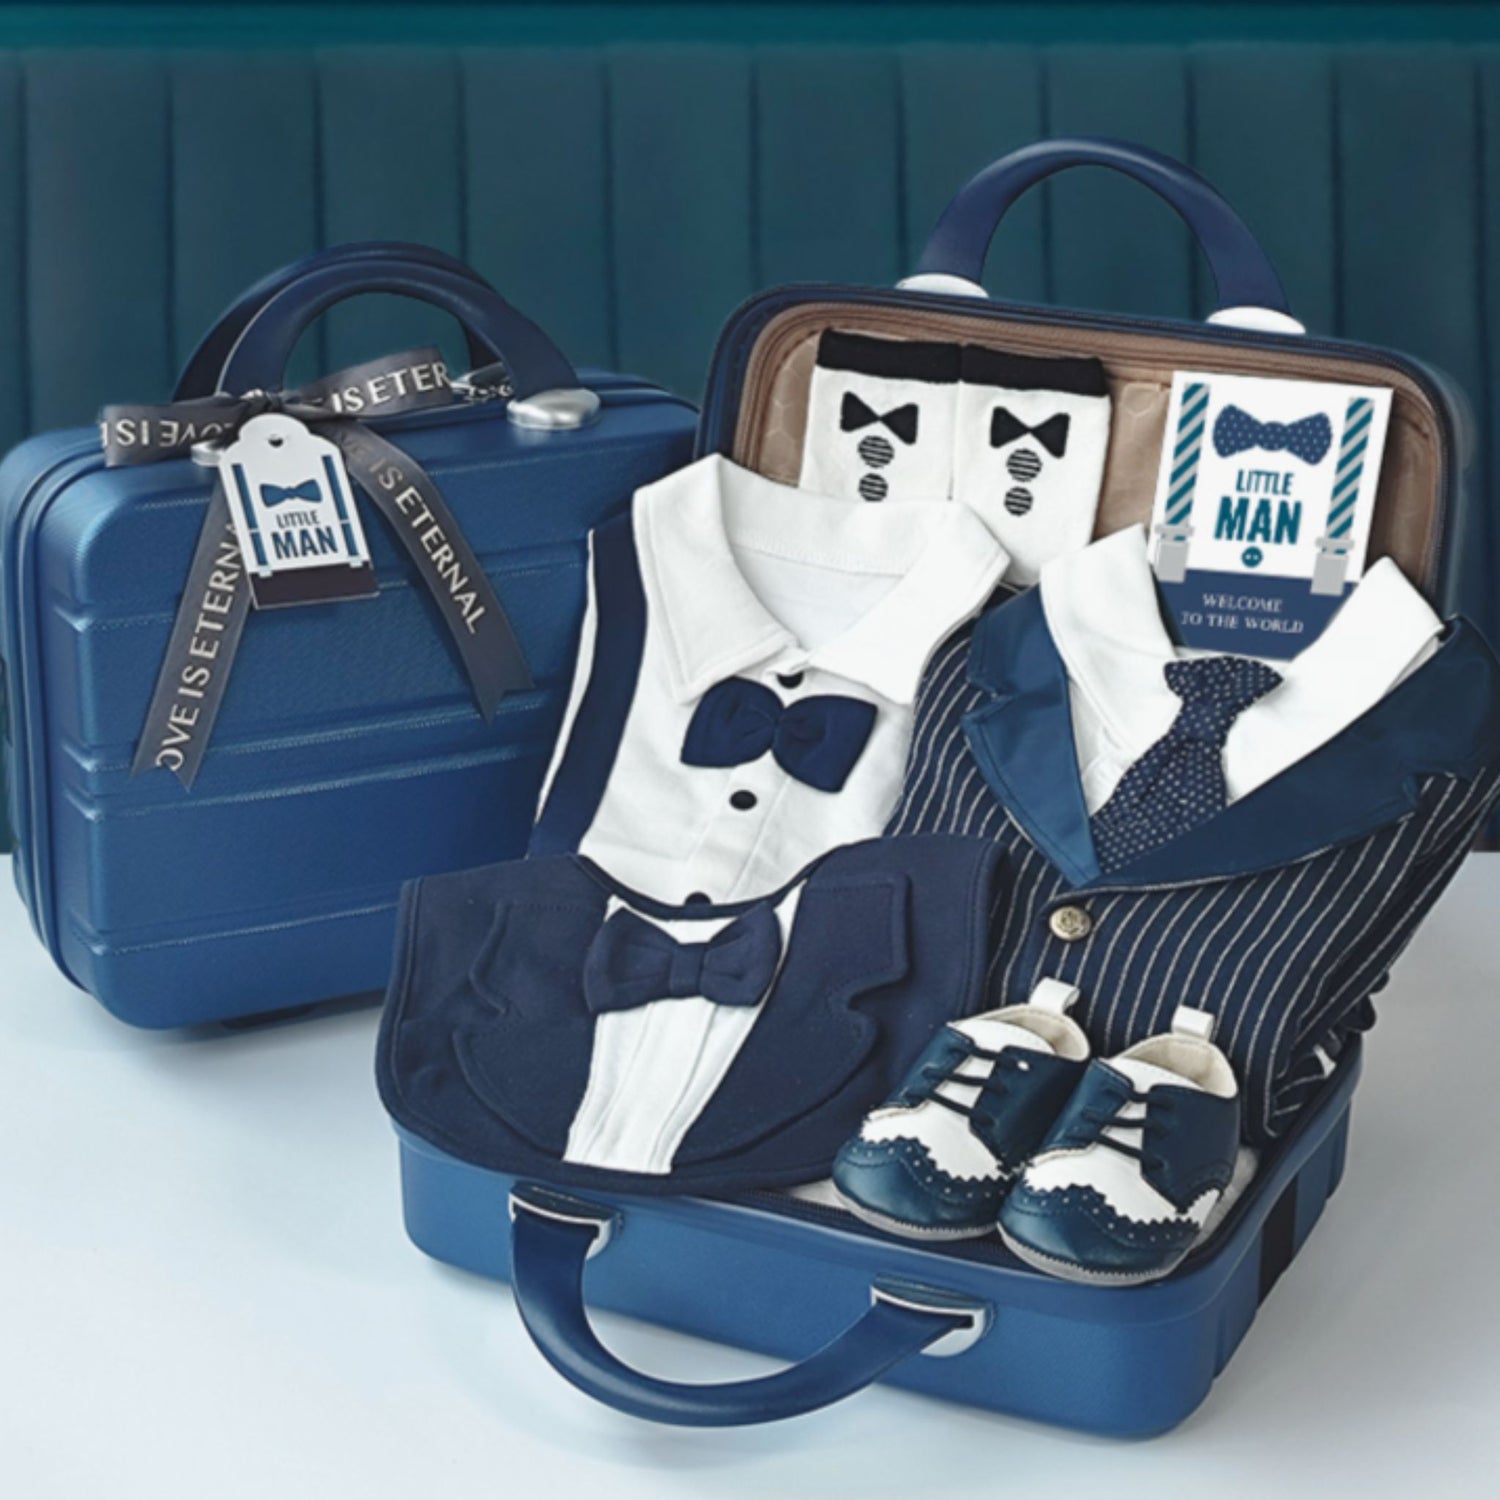 Baby boy gift luggage set